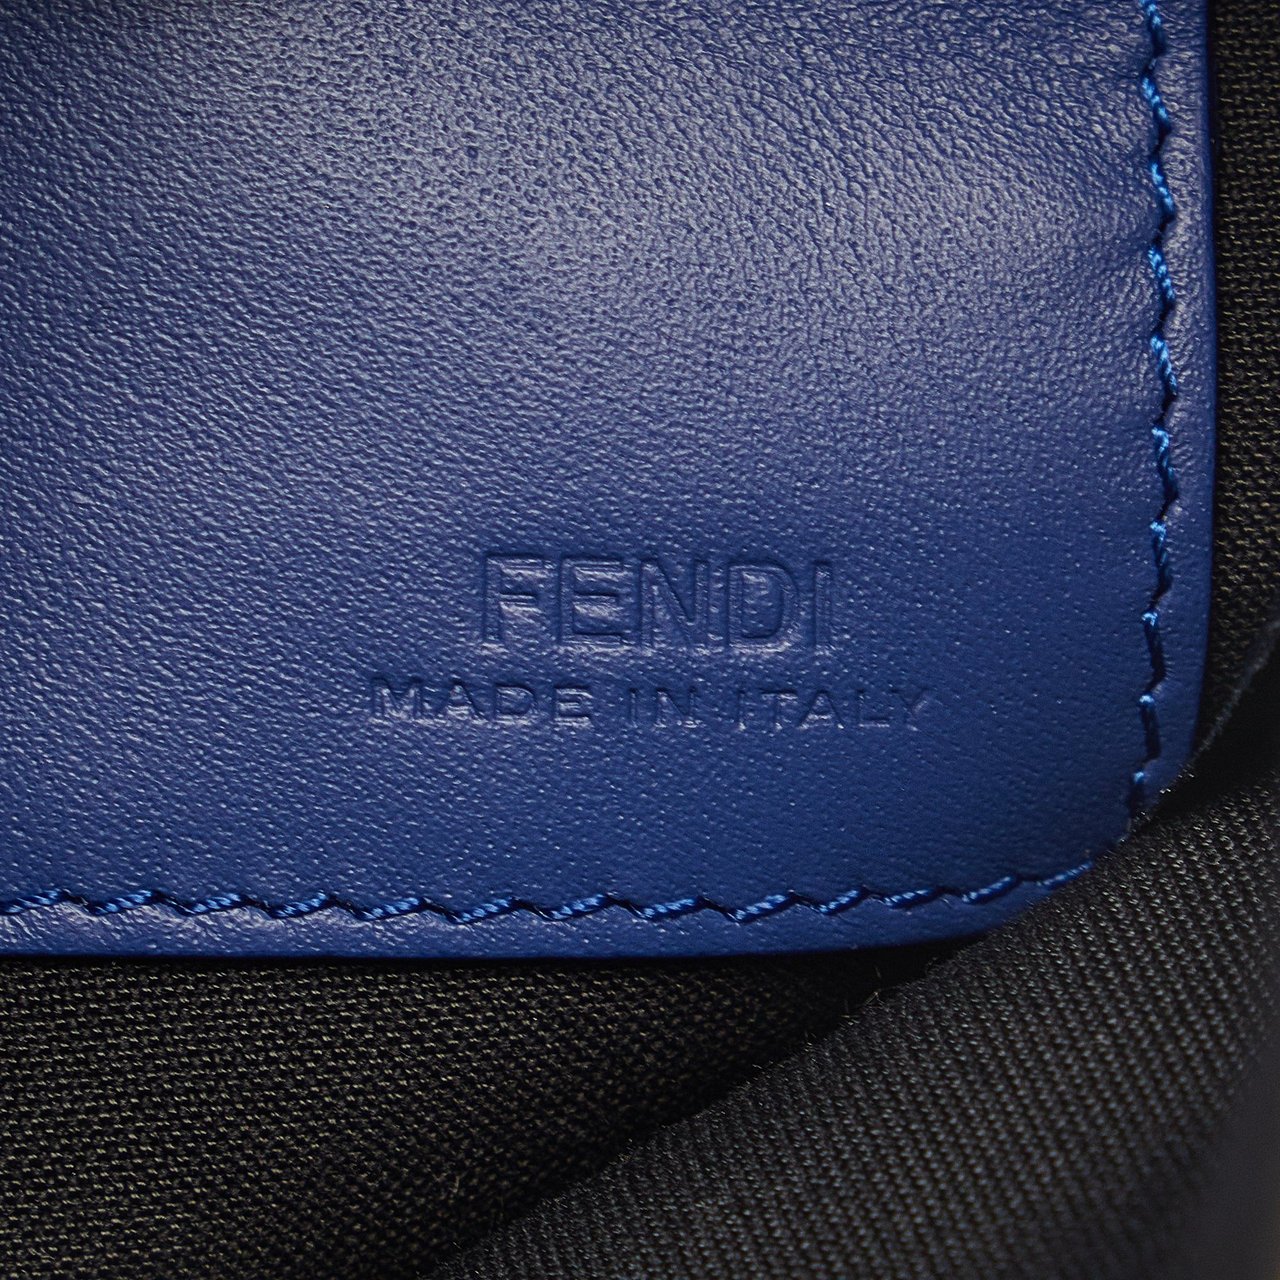 Fendi Baguette Leather Zip Clutch Bag Blauw